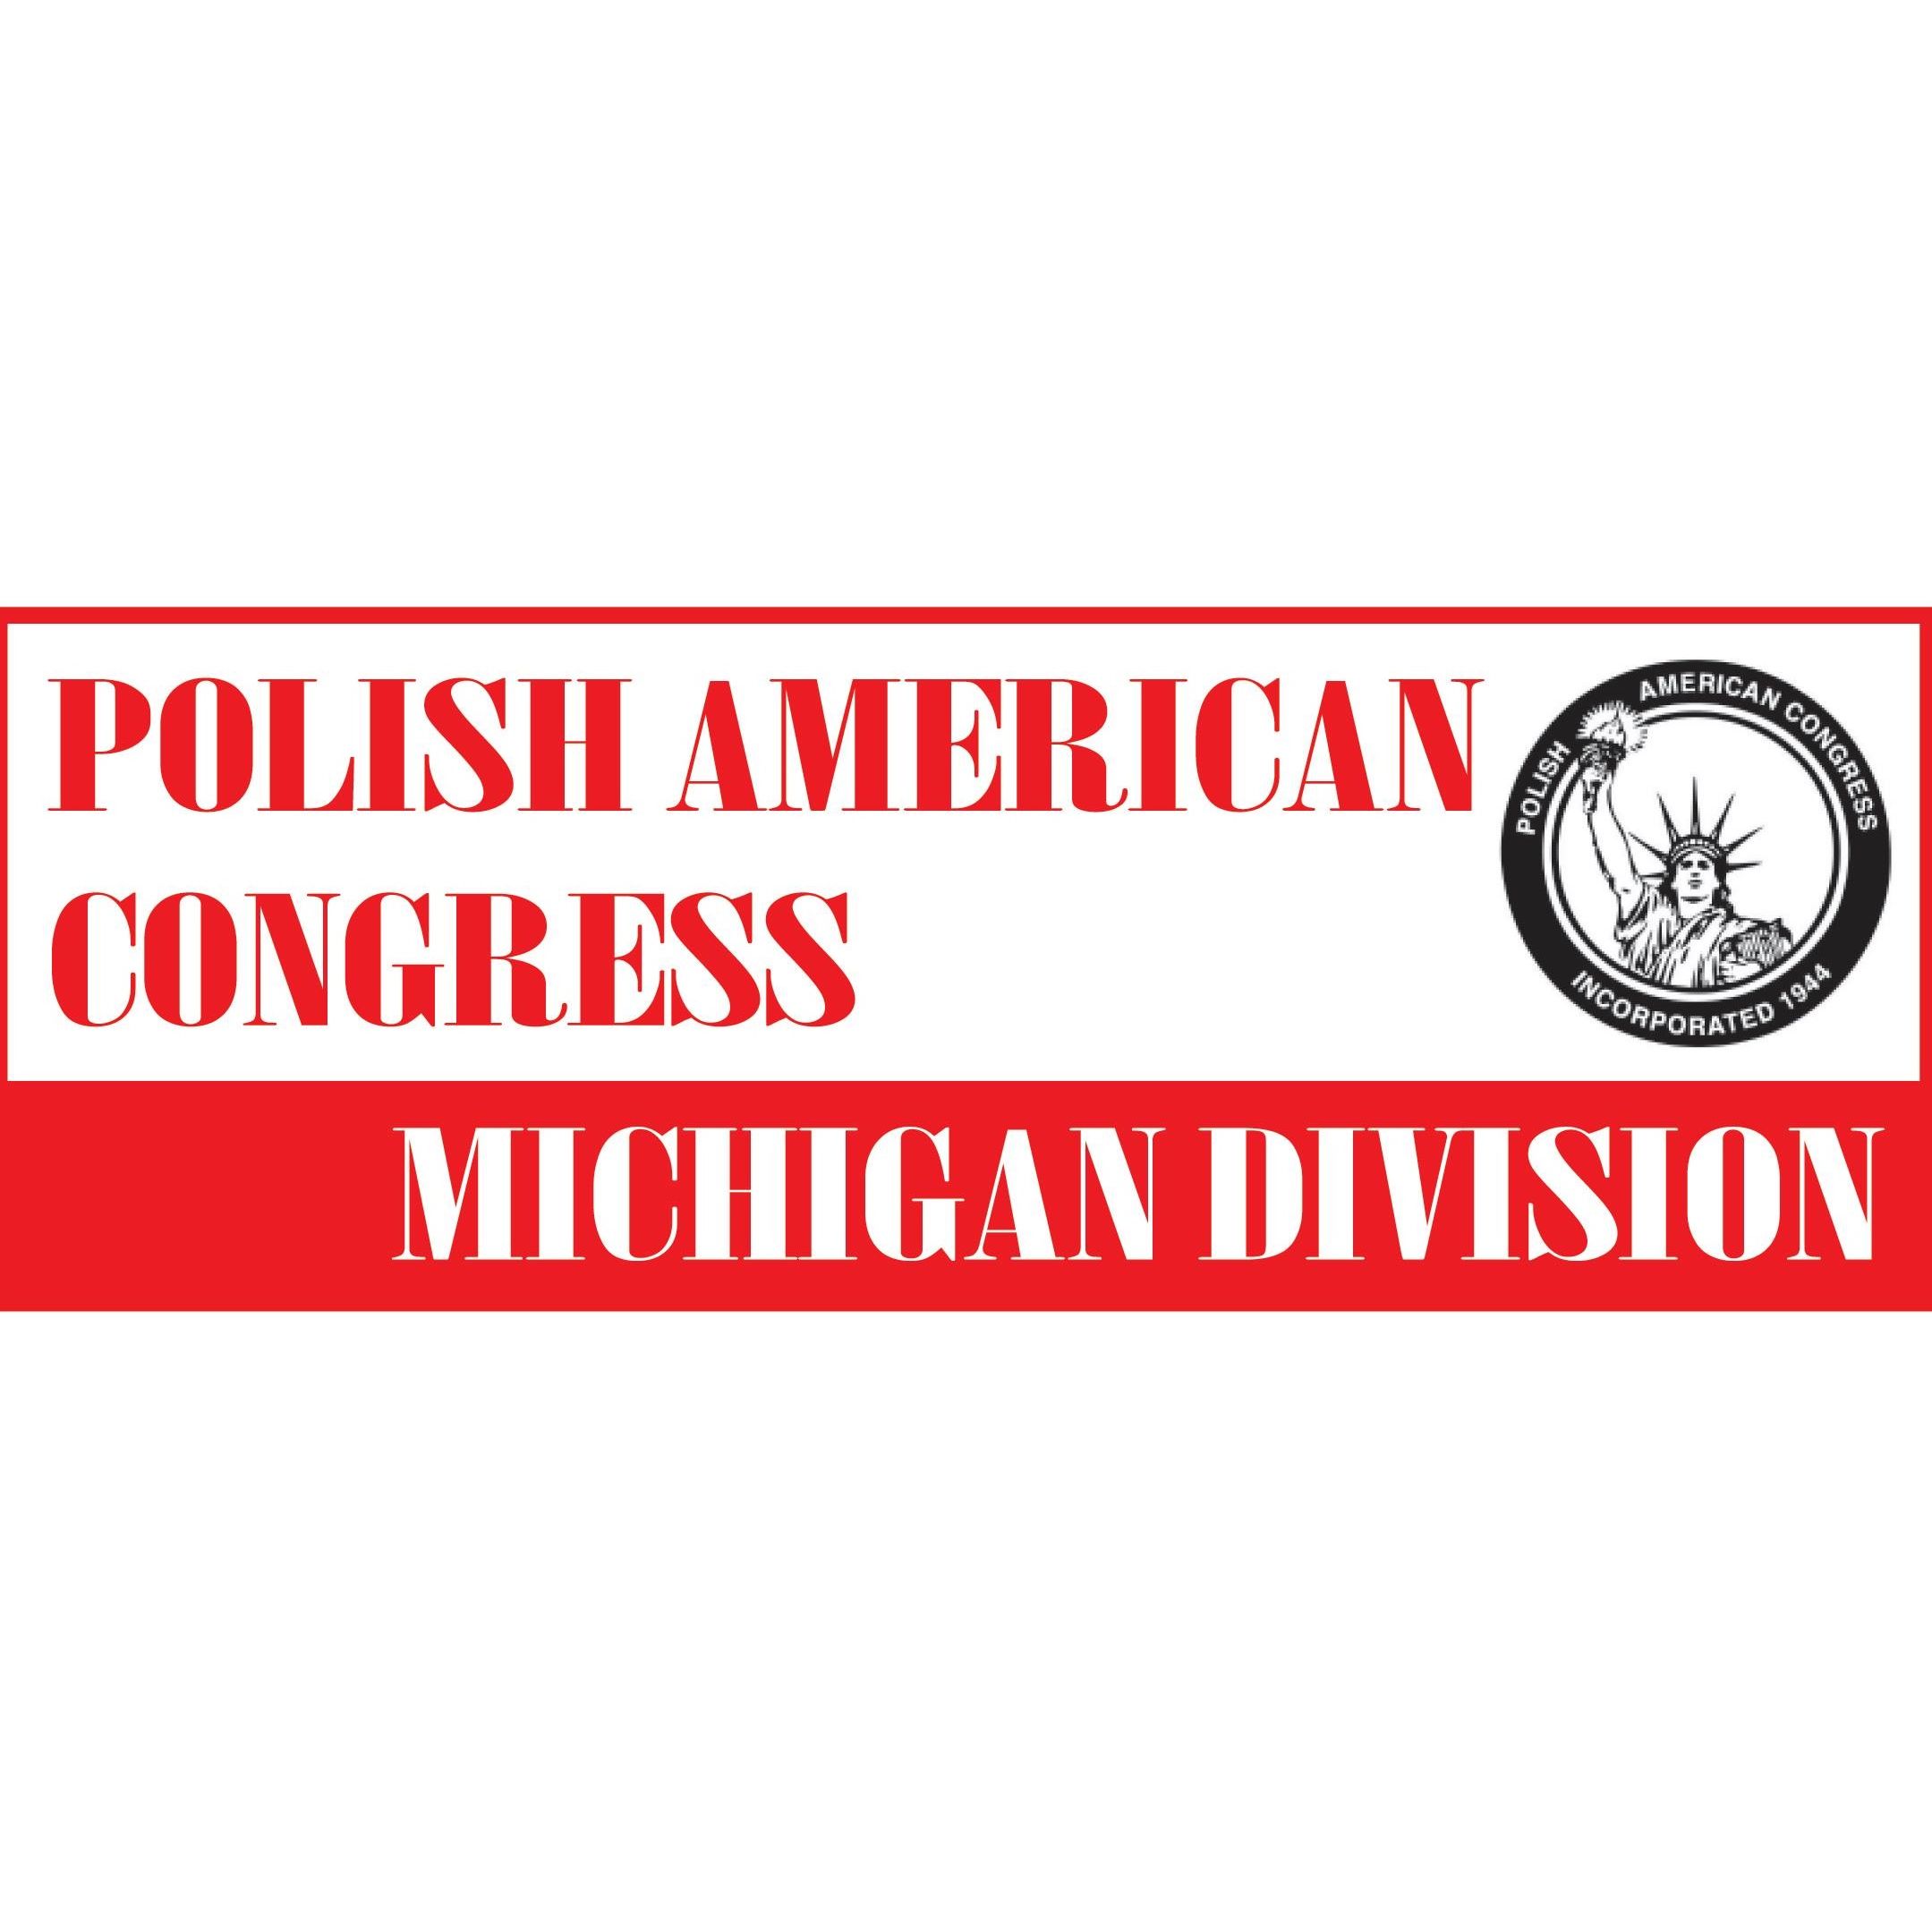 Polish Associations Near Me - Polish American Congress Michigan Division